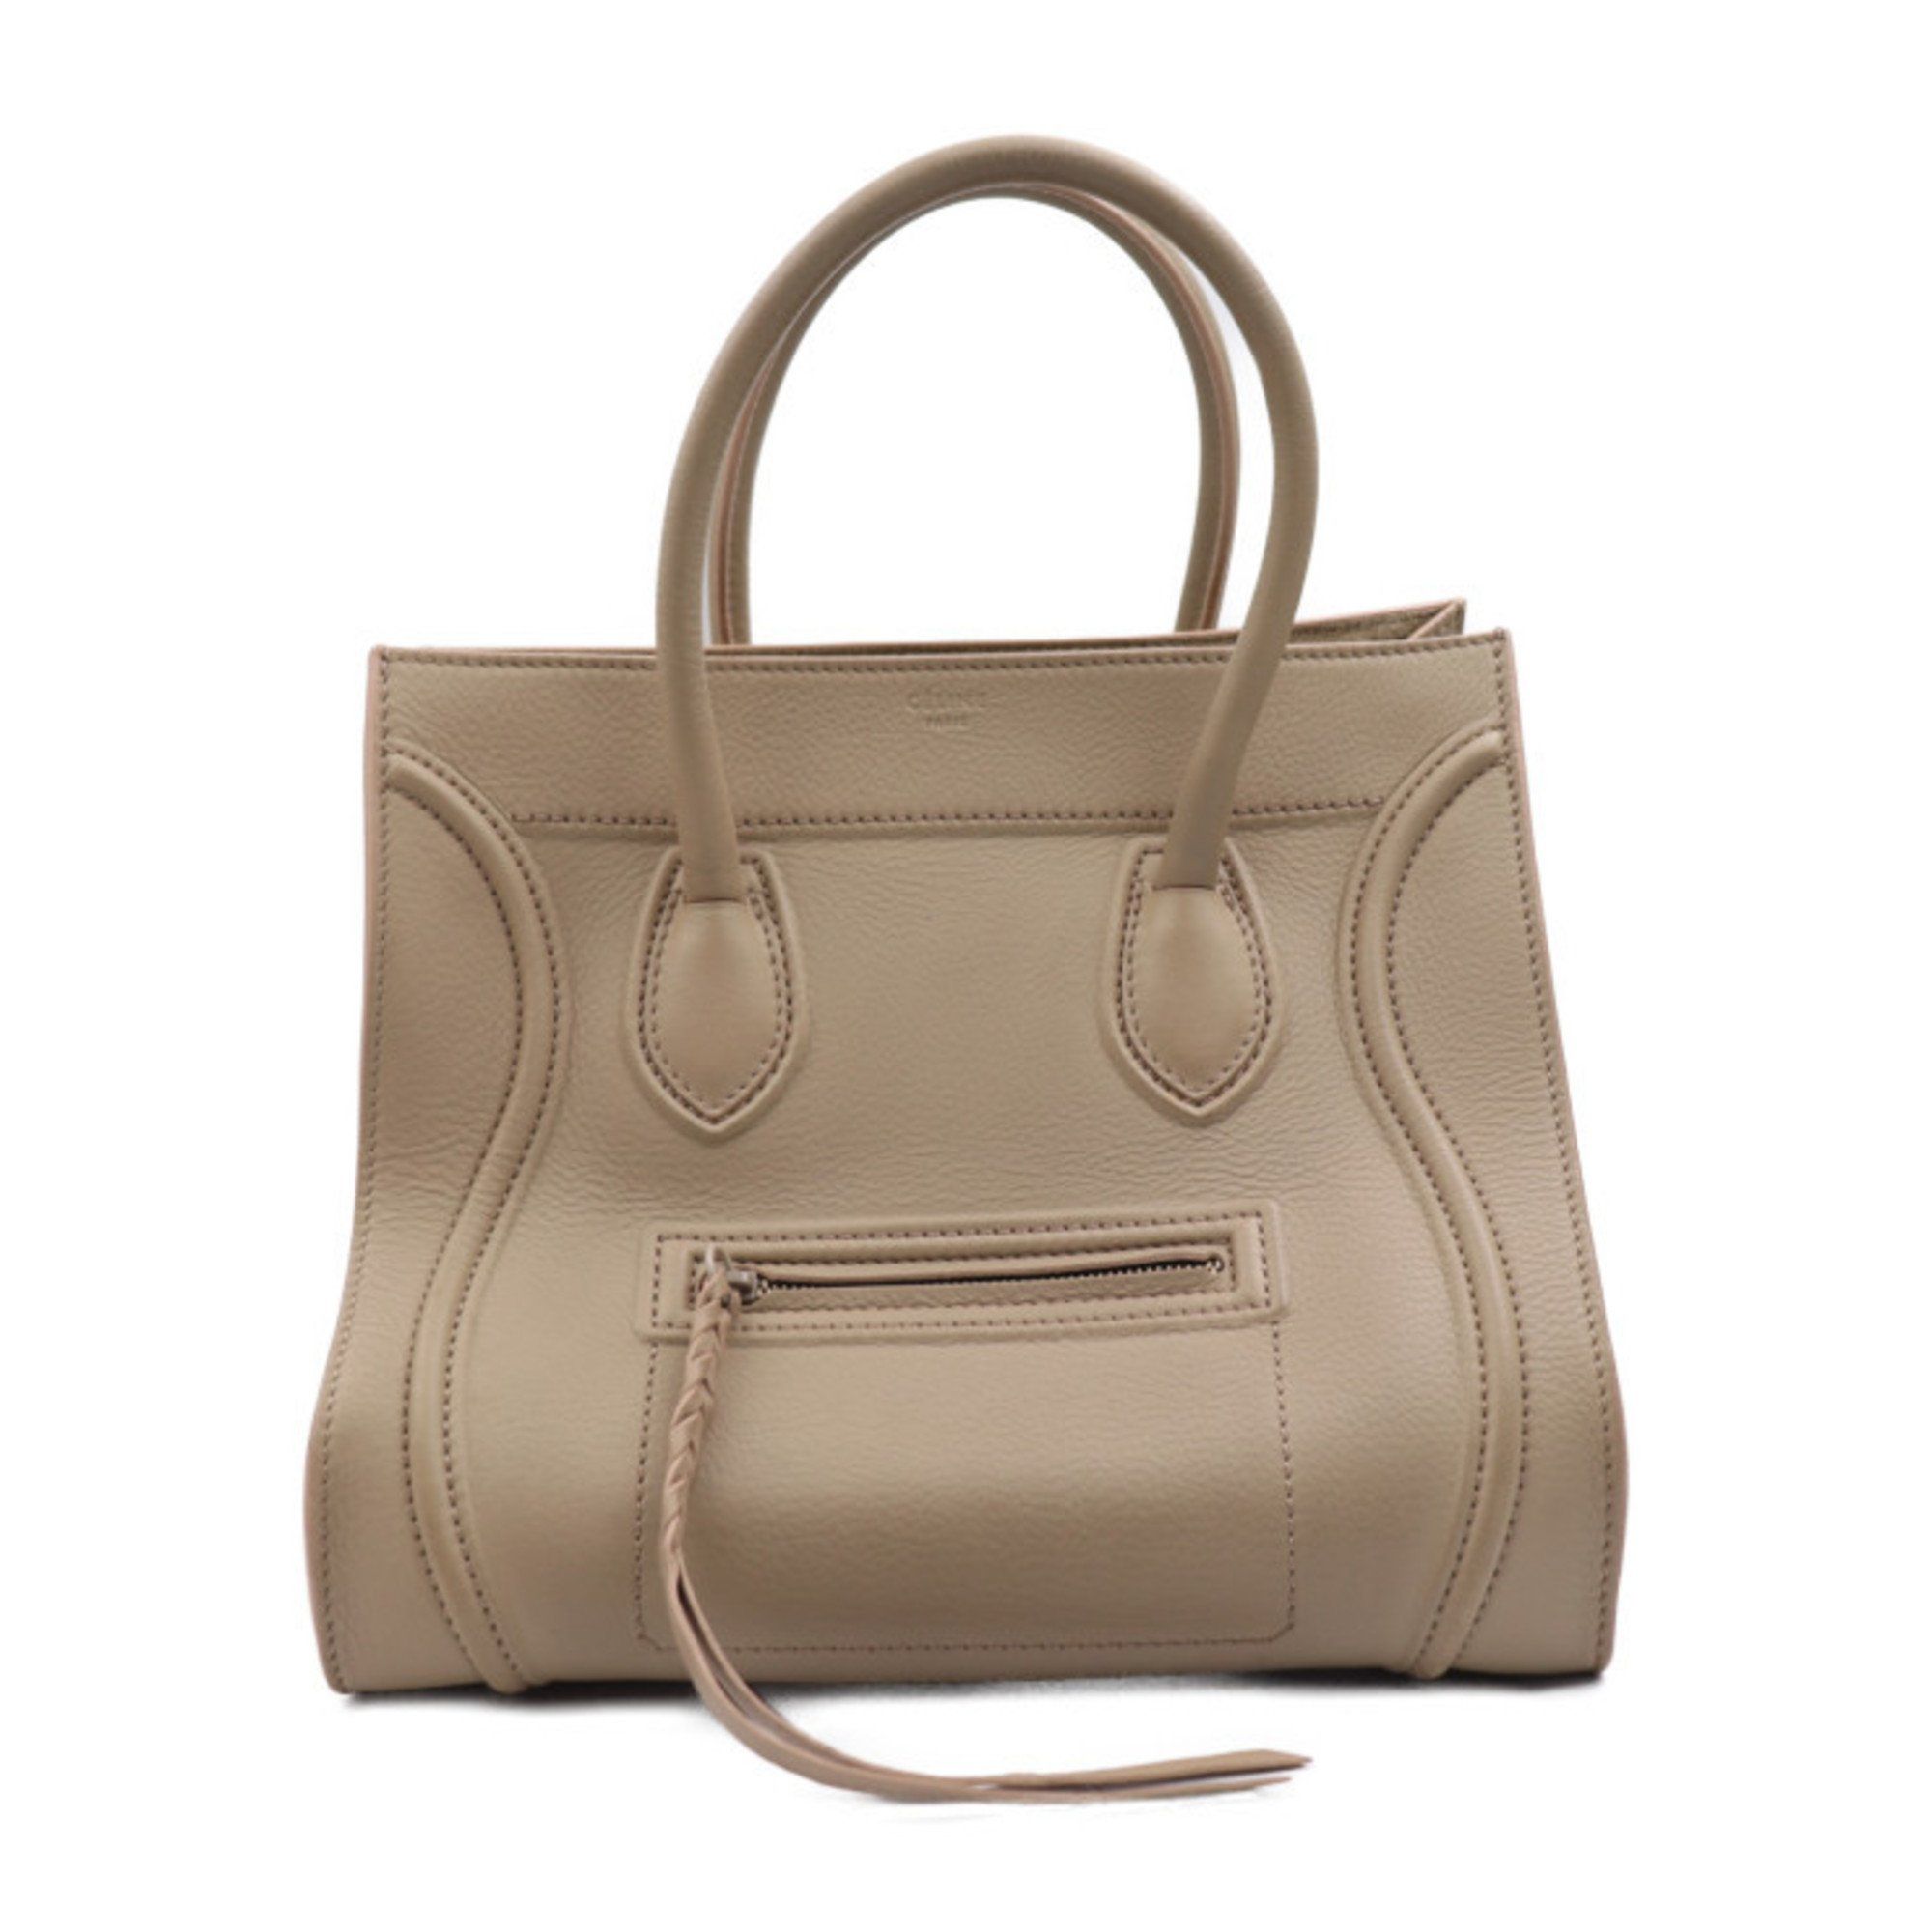 image of Celine Céline Luggage Phantom Handbag in Beige, Women's